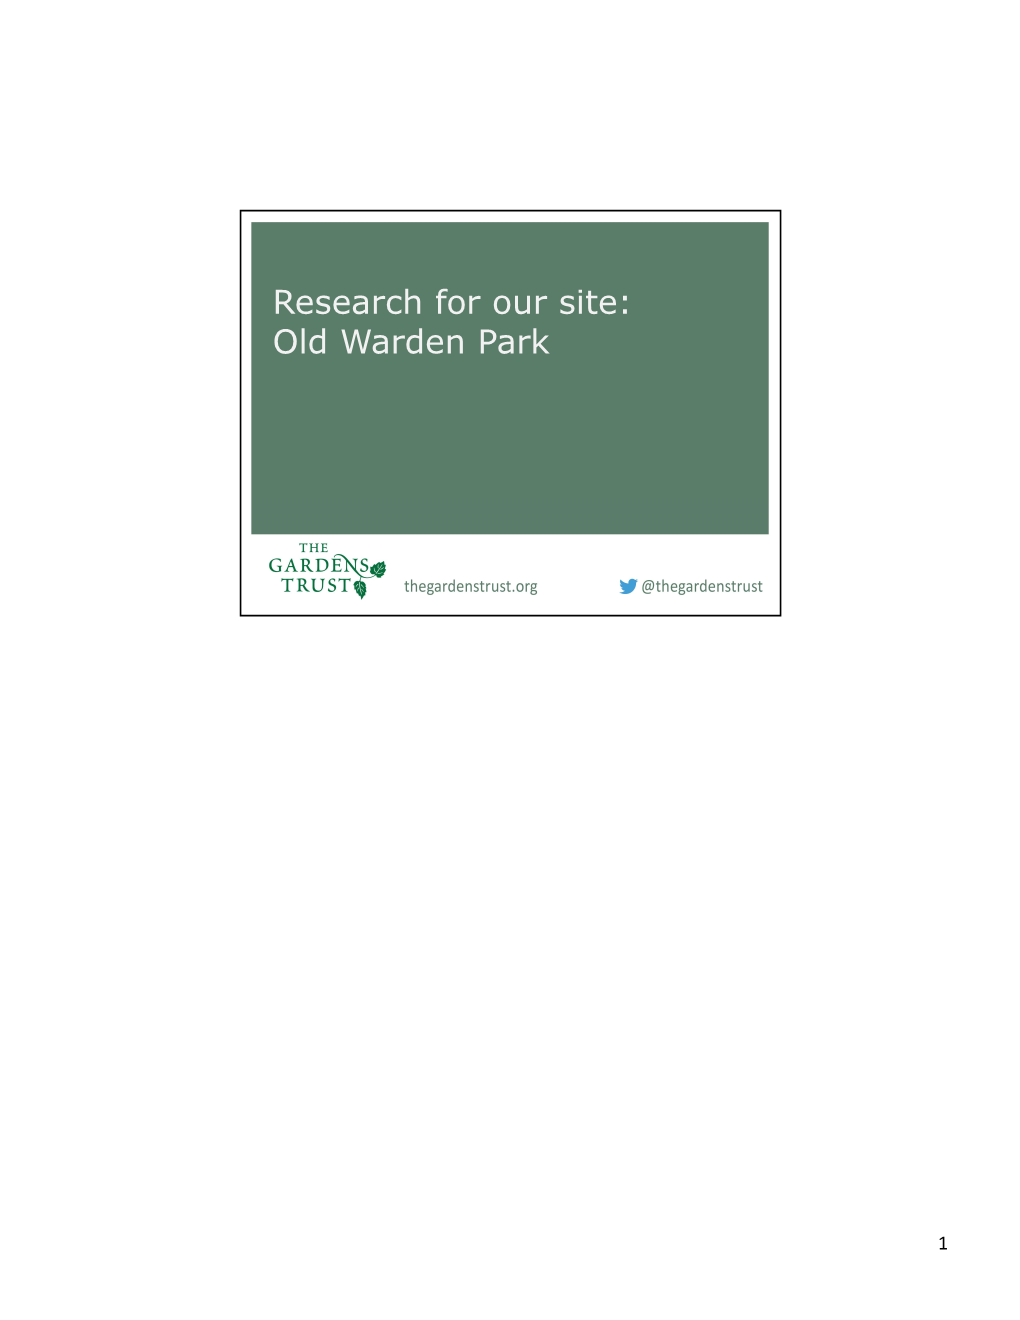 Old Warden Park